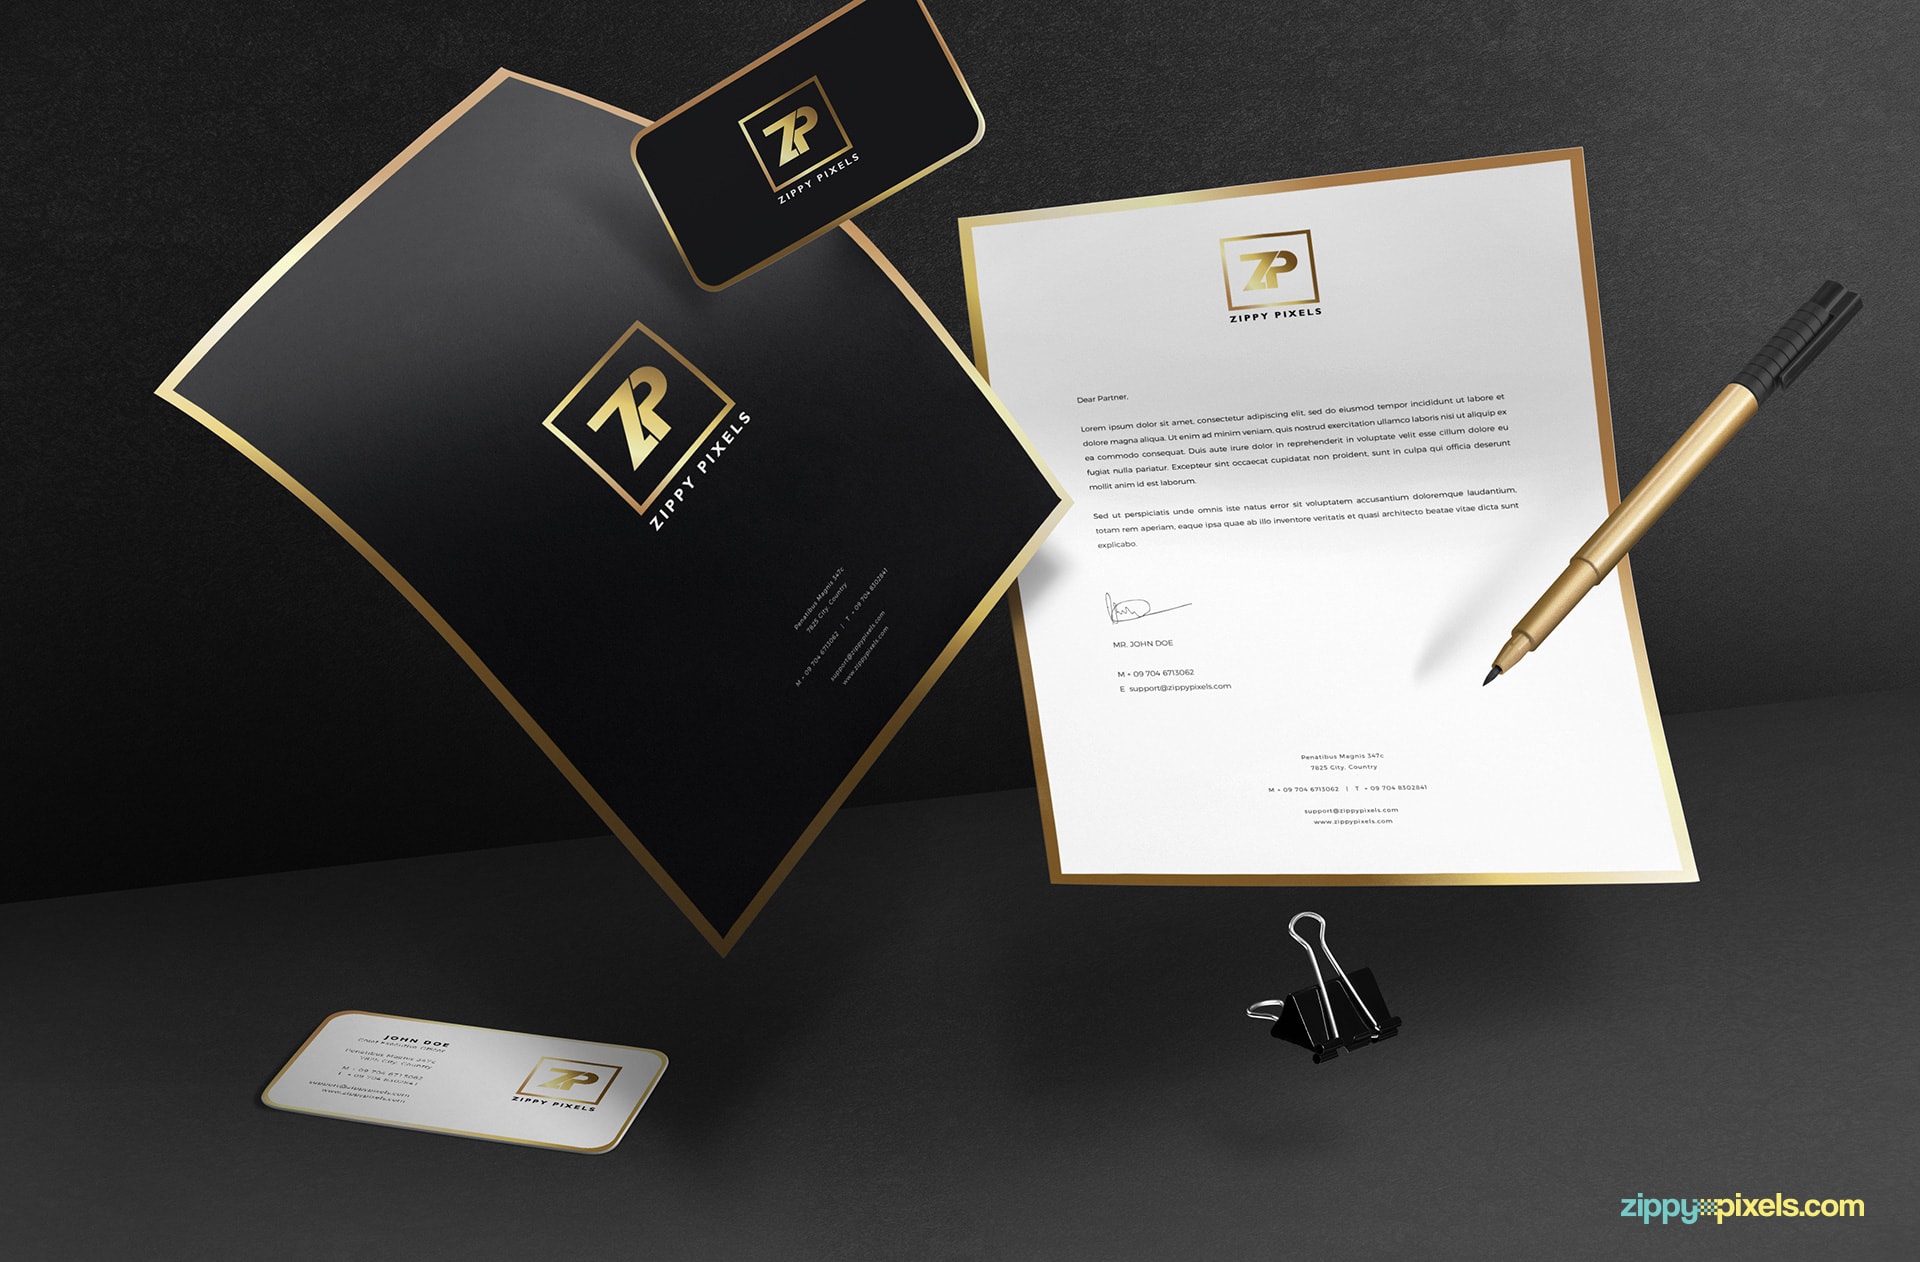 gravity-scene-gold-foil-A4-paper-business-card-pen-4